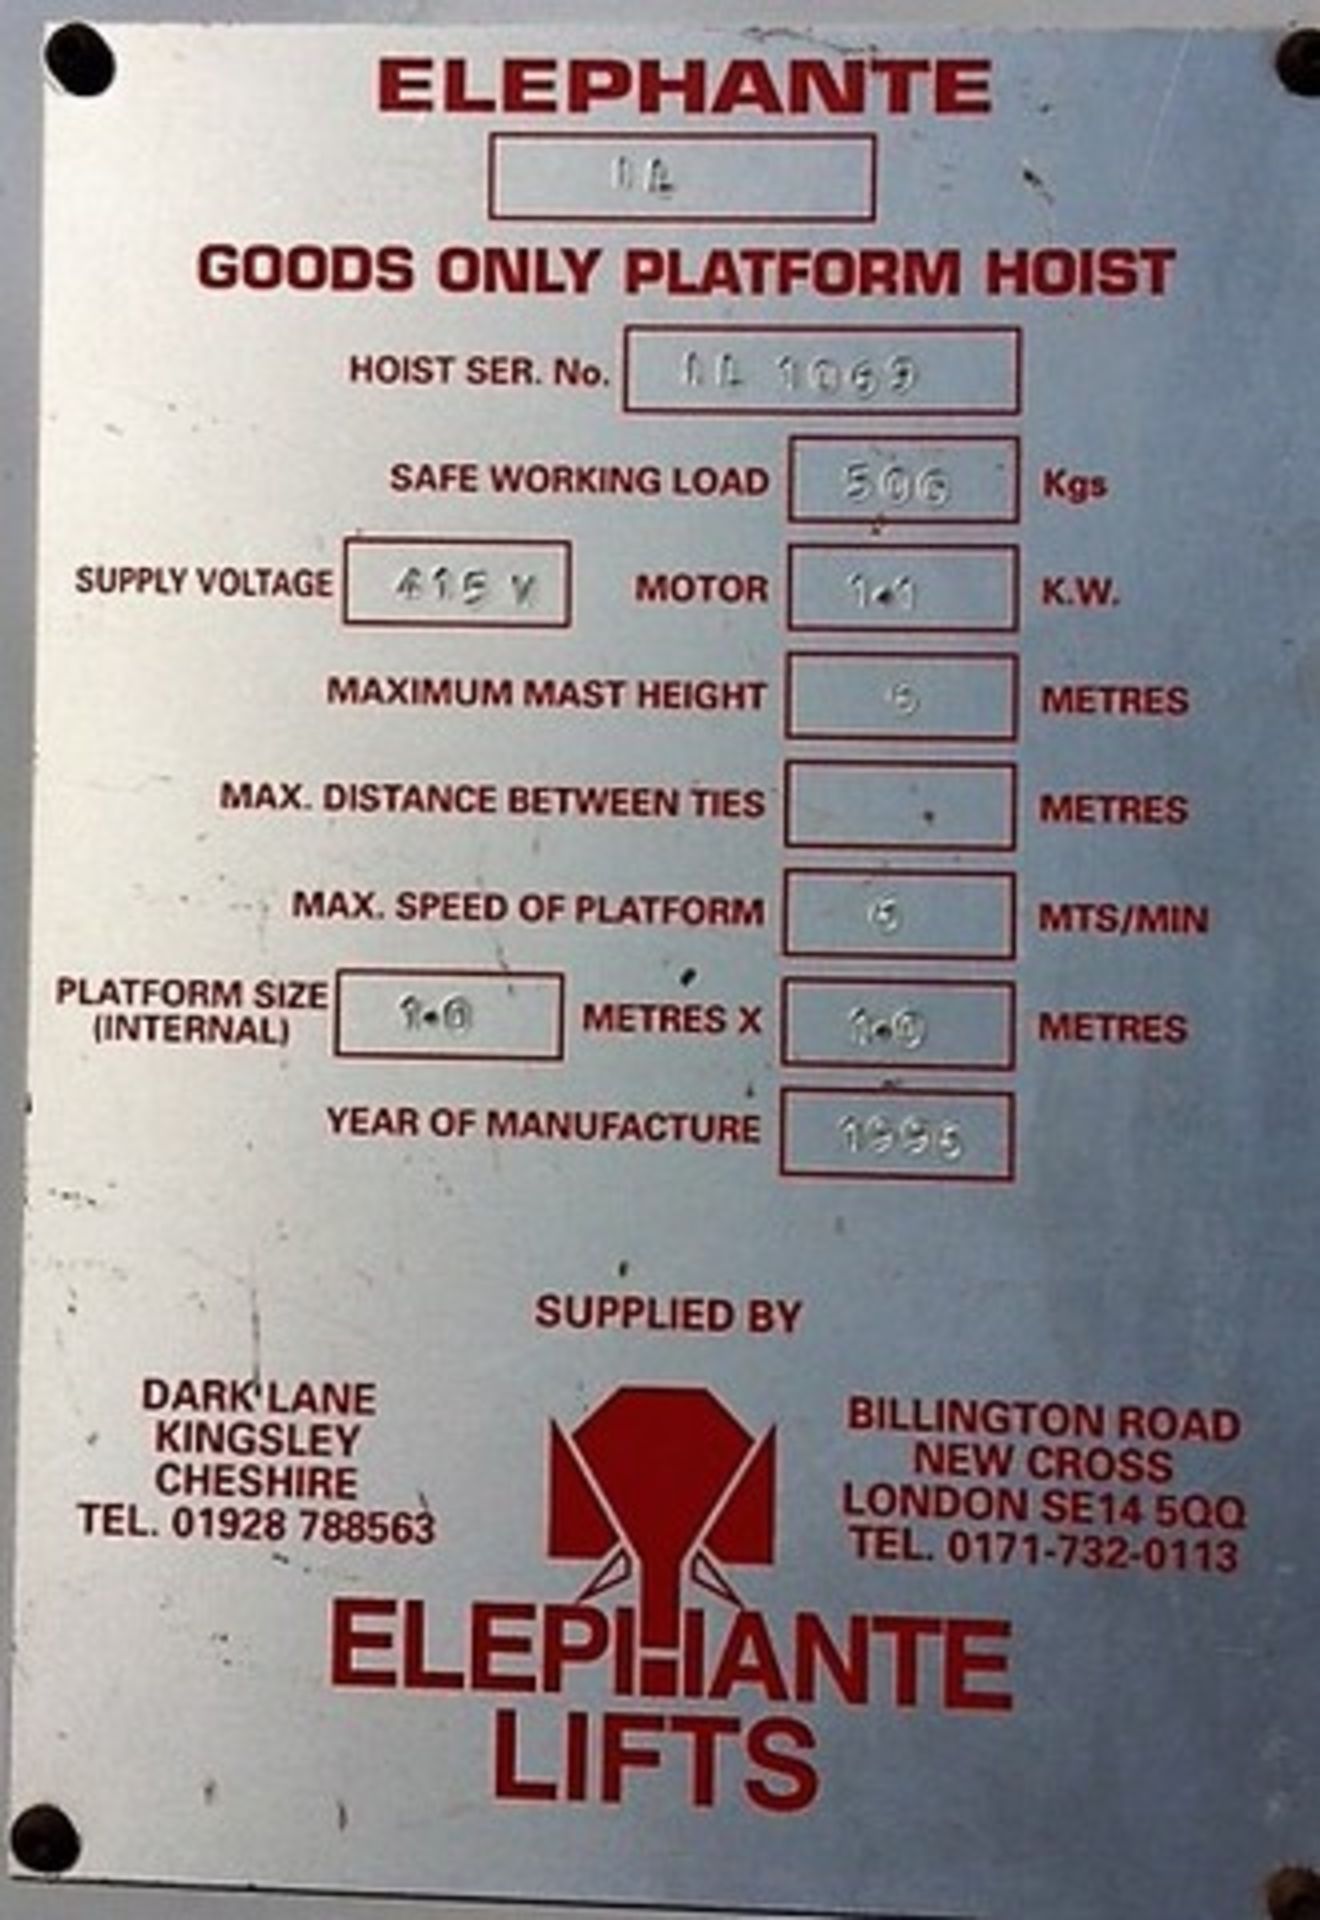 1996 ELEPHANTE goods only lift. Safe working load 500kg. S/N 1L1069. Supply voltage 415. Max mast he - Bild 2 aus 5